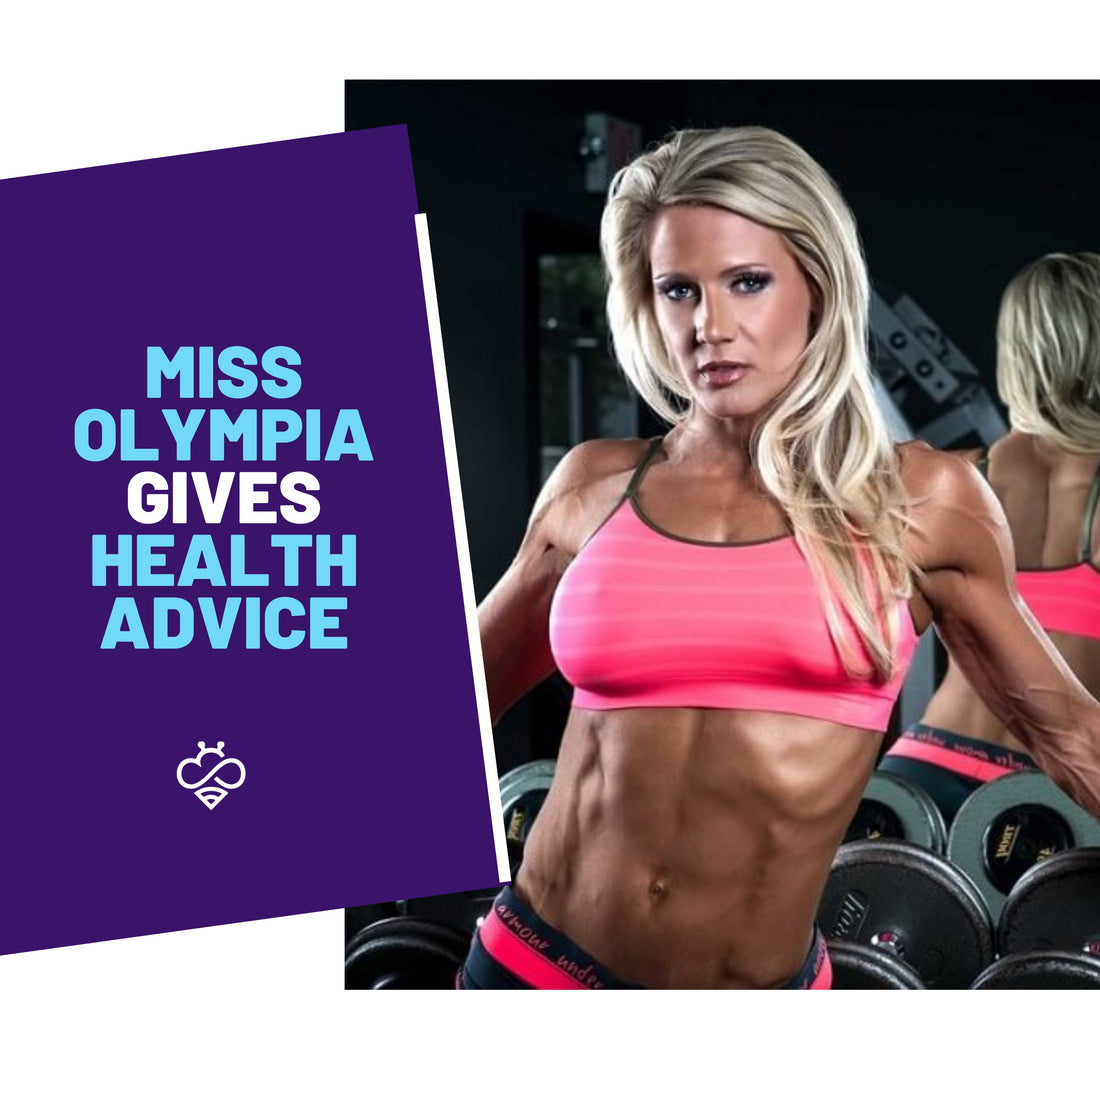 Miss Olympia gives health advice